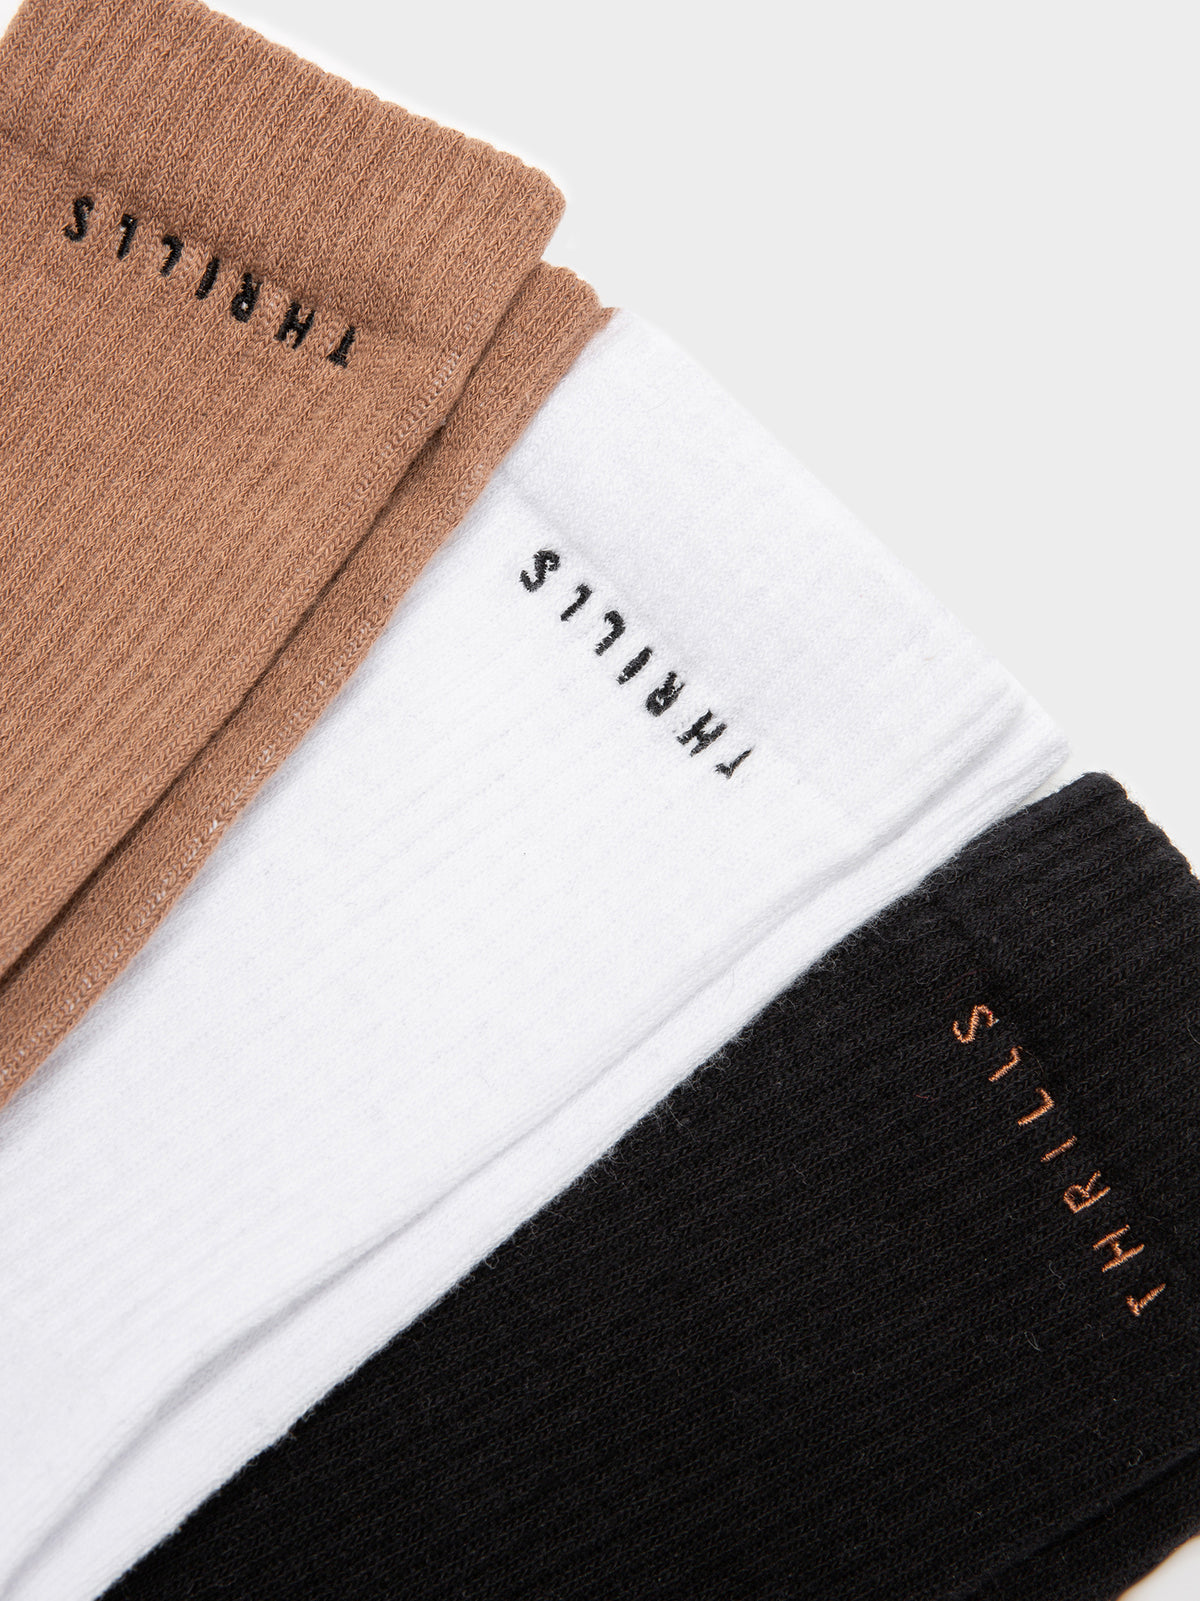 3 Pairs of Minimal Thrills Crew Socks in Brown, White &amp; Black